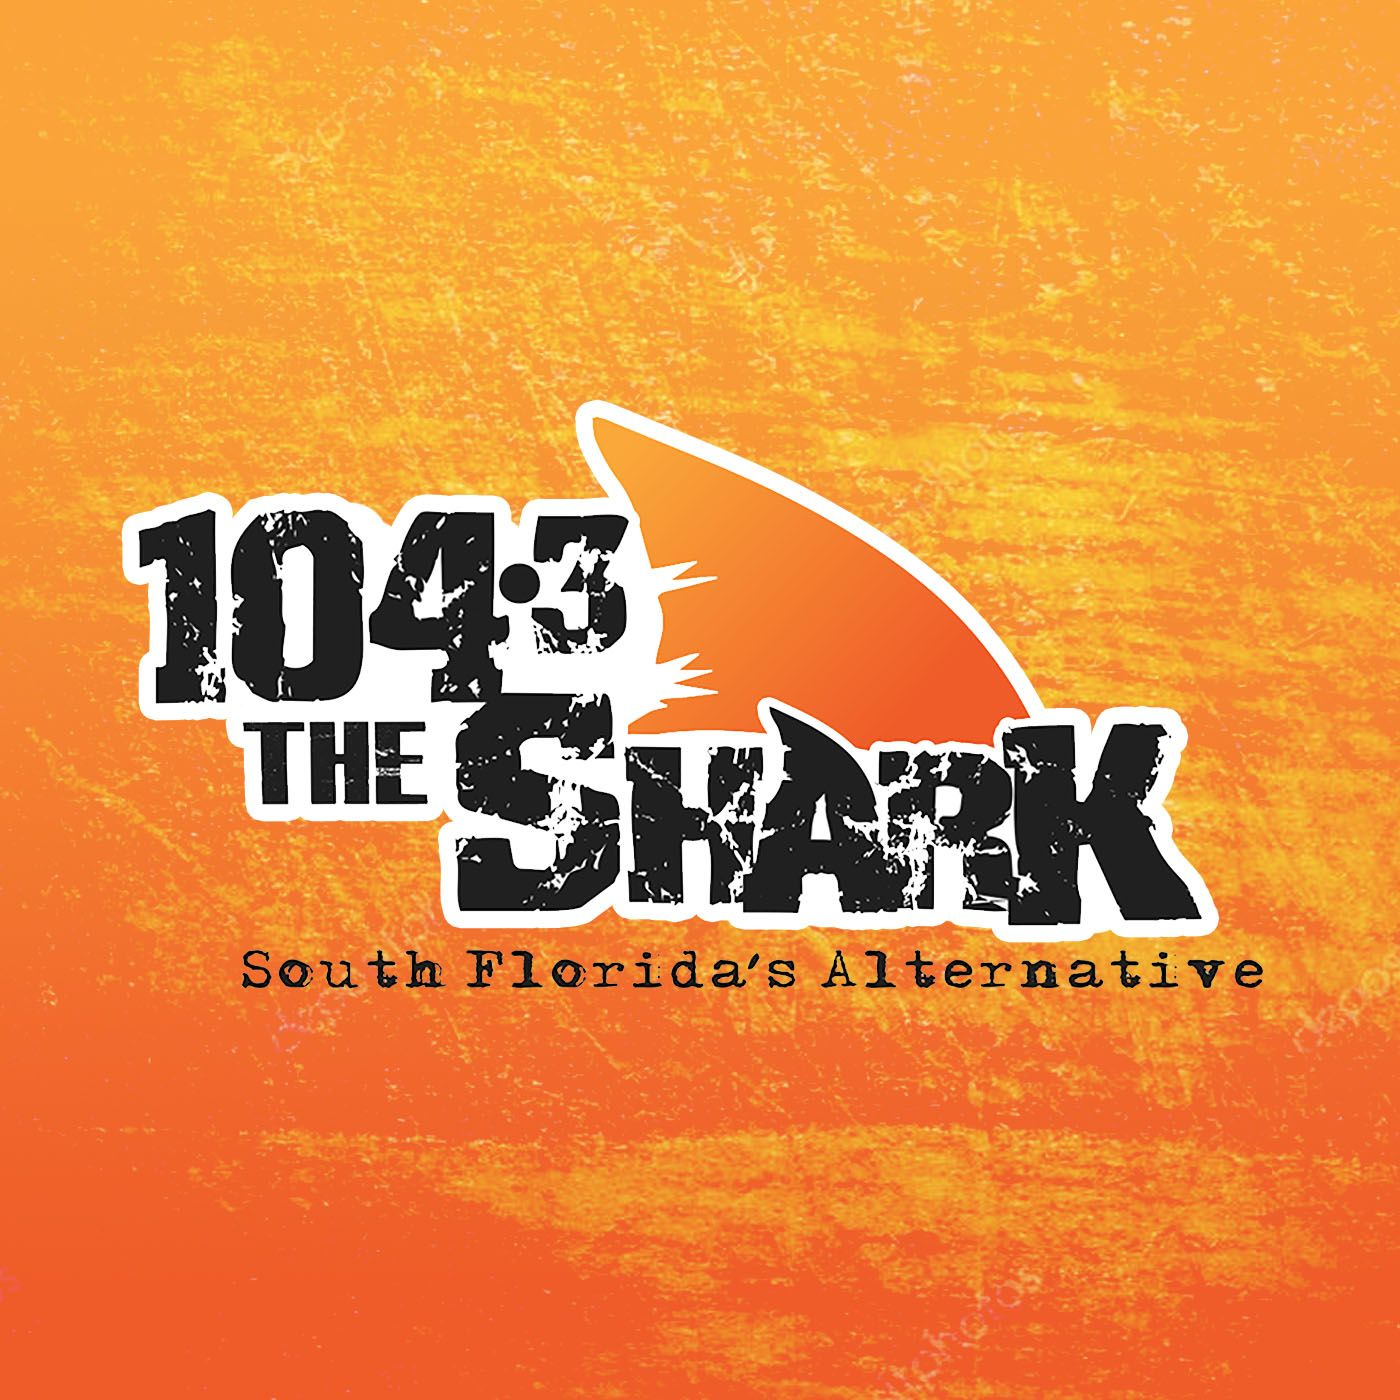 104.3 The Shark Audio On-Demand